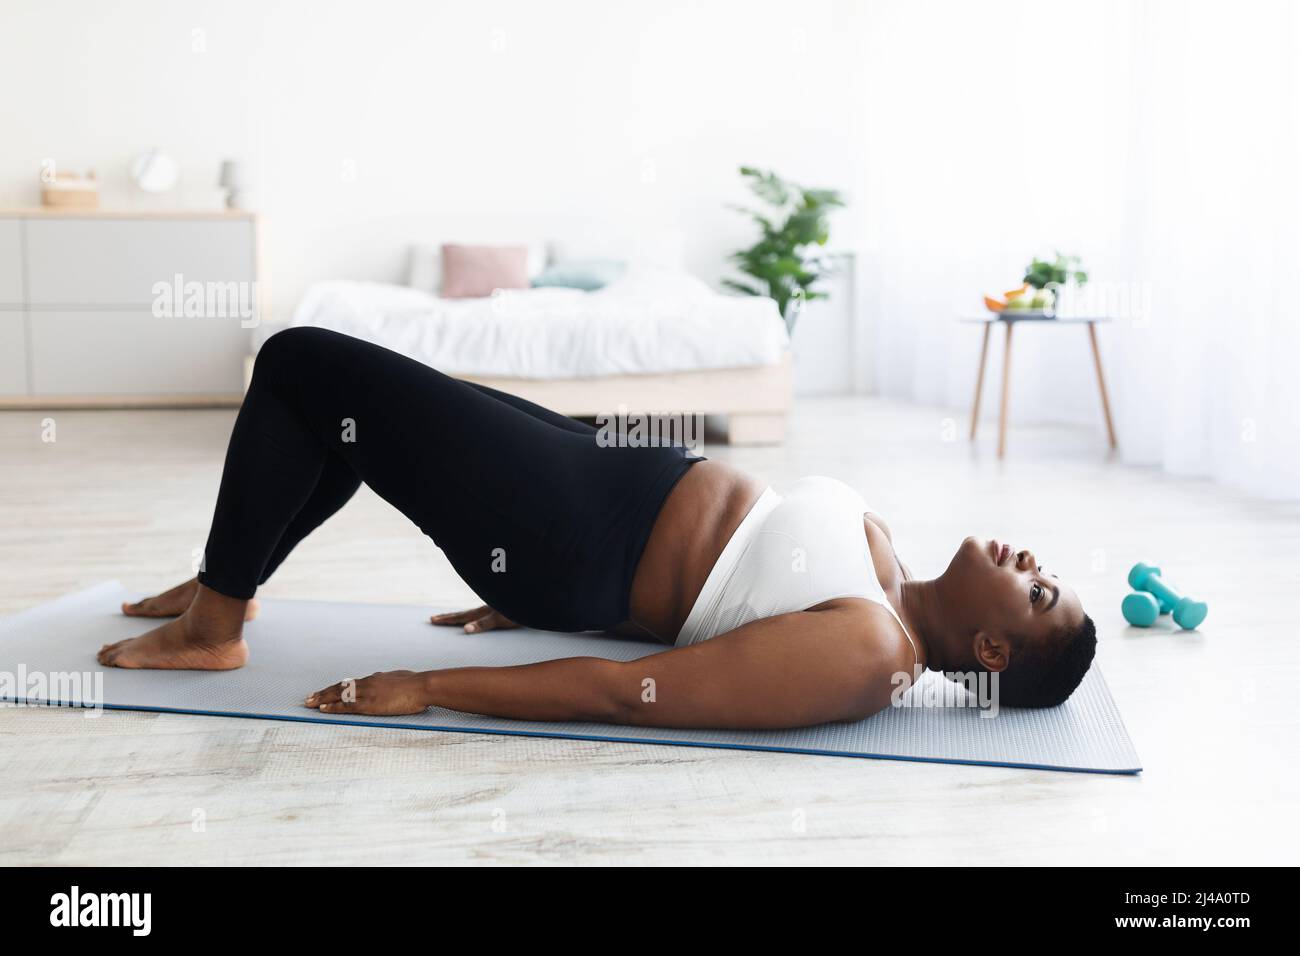 Sporty Black Woman Doing Exercises on Yoga Mat, Standing in Half Bridge Pose  Indoors, Side View Stock Photo - Image of beautiful, coronavirus: 206486962